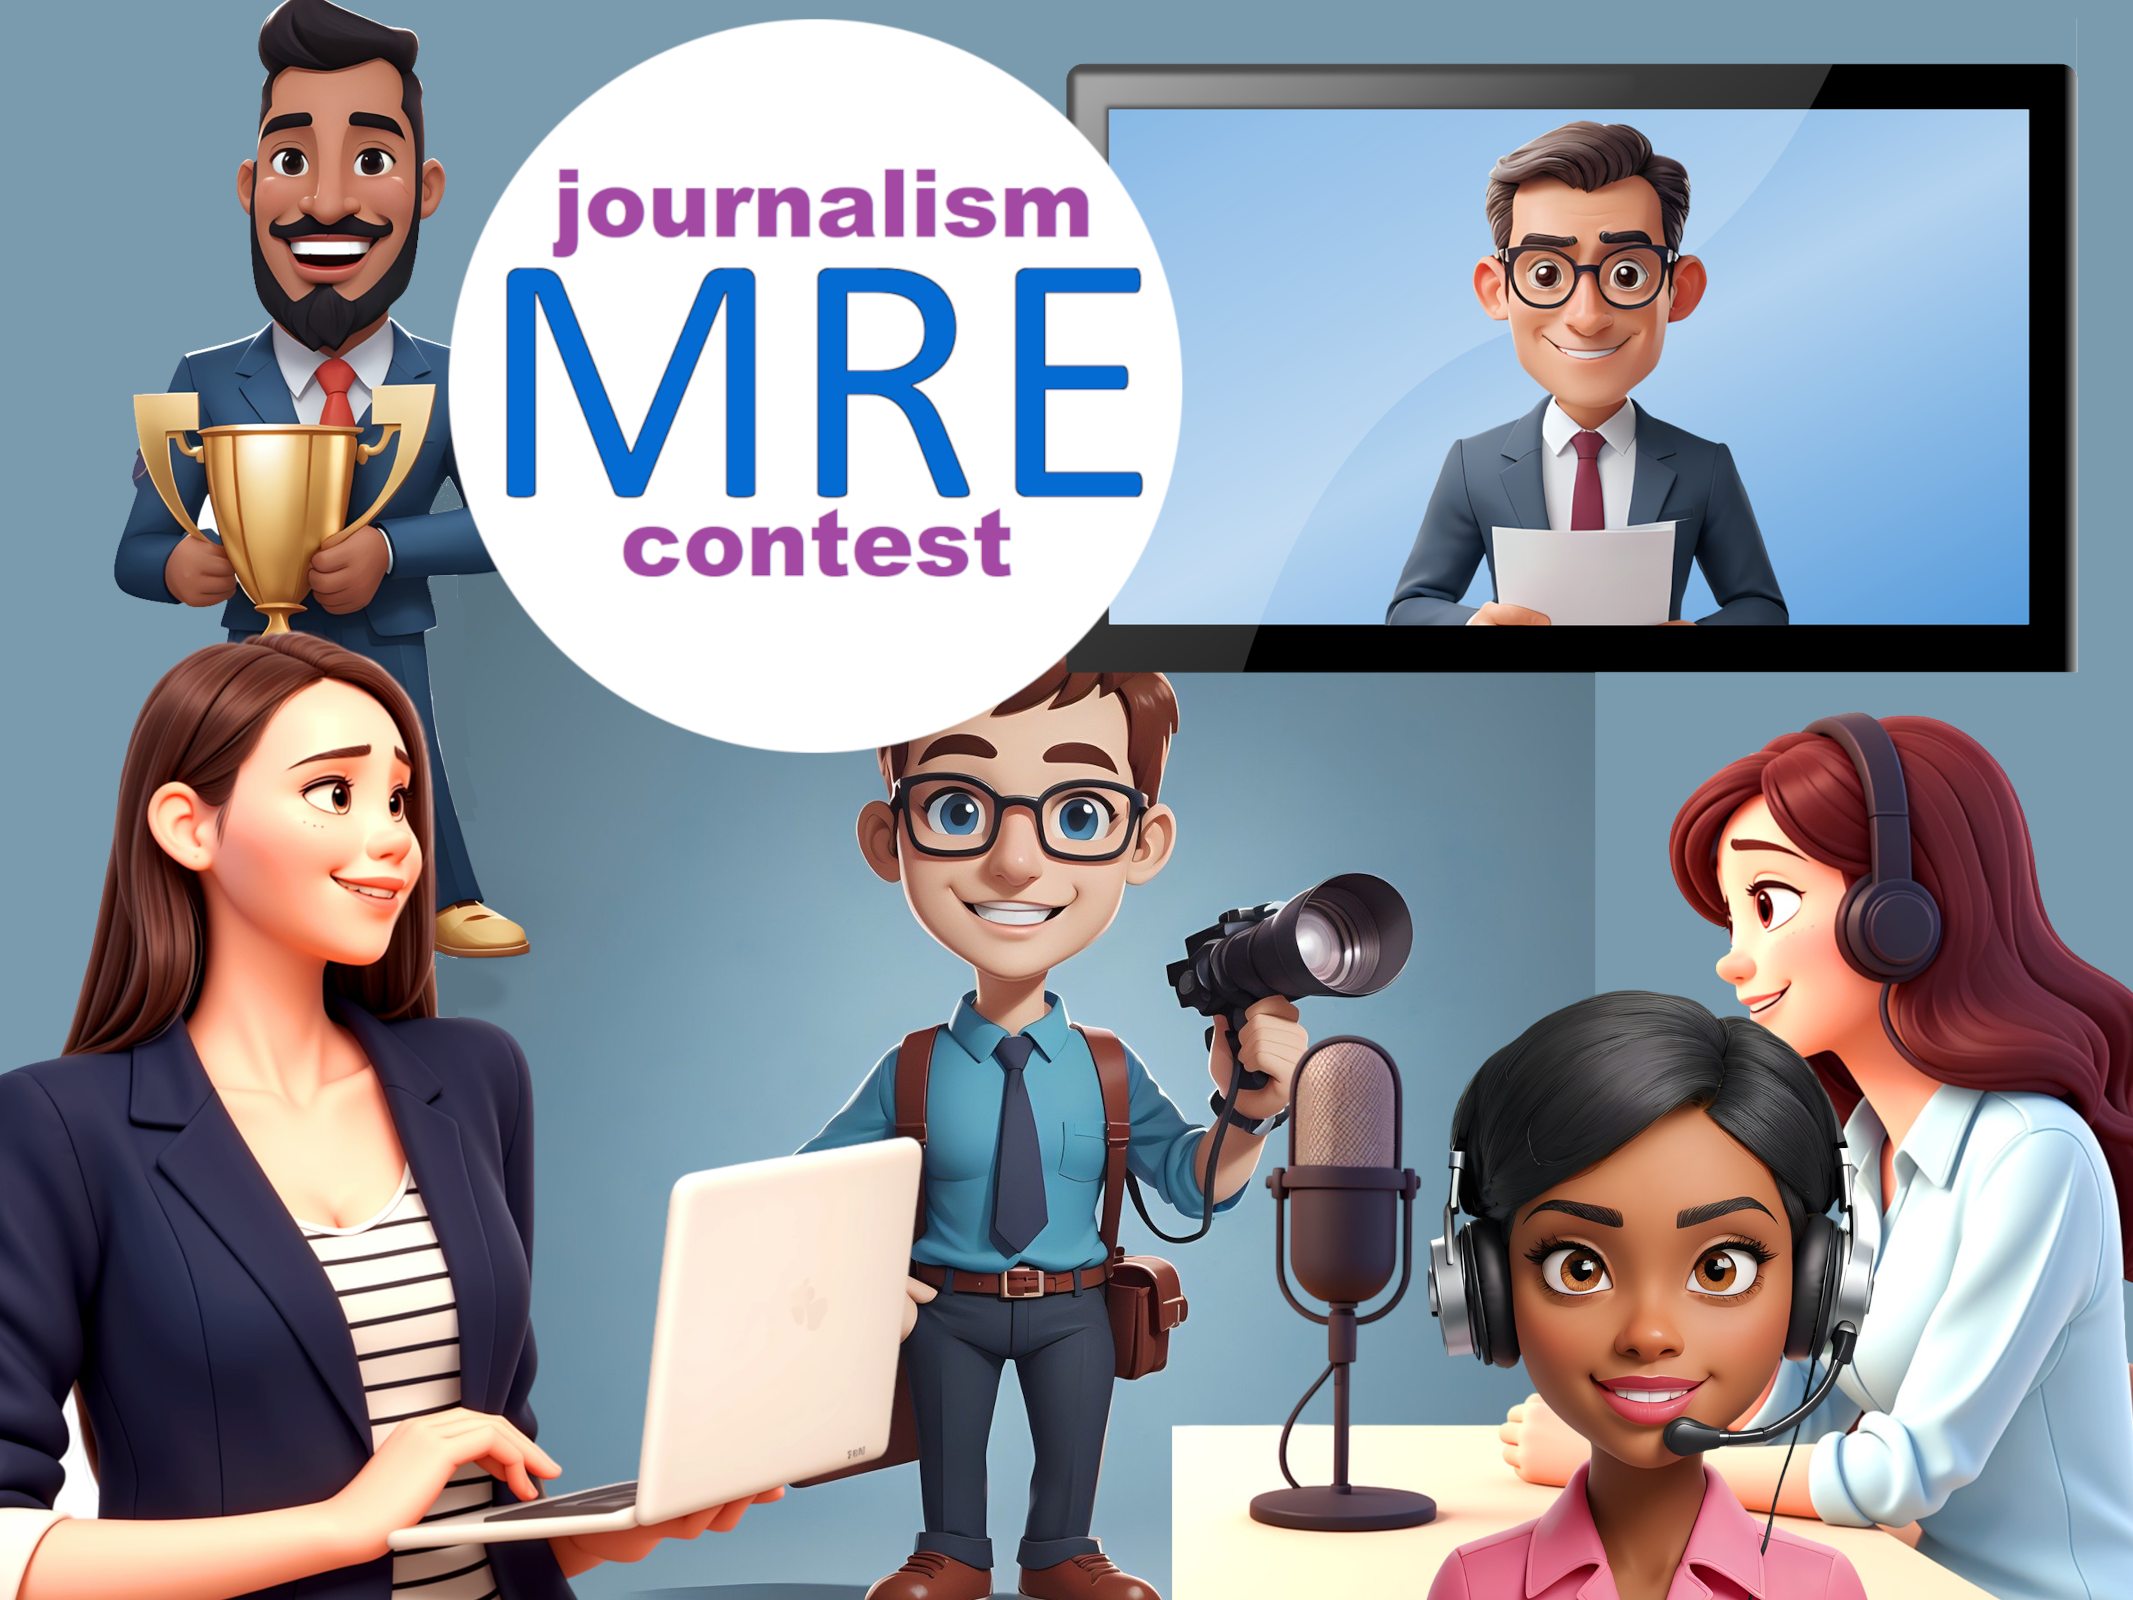 MRE journalism contest reporter, editor, podcaster, photographer, broadcaster, radio host